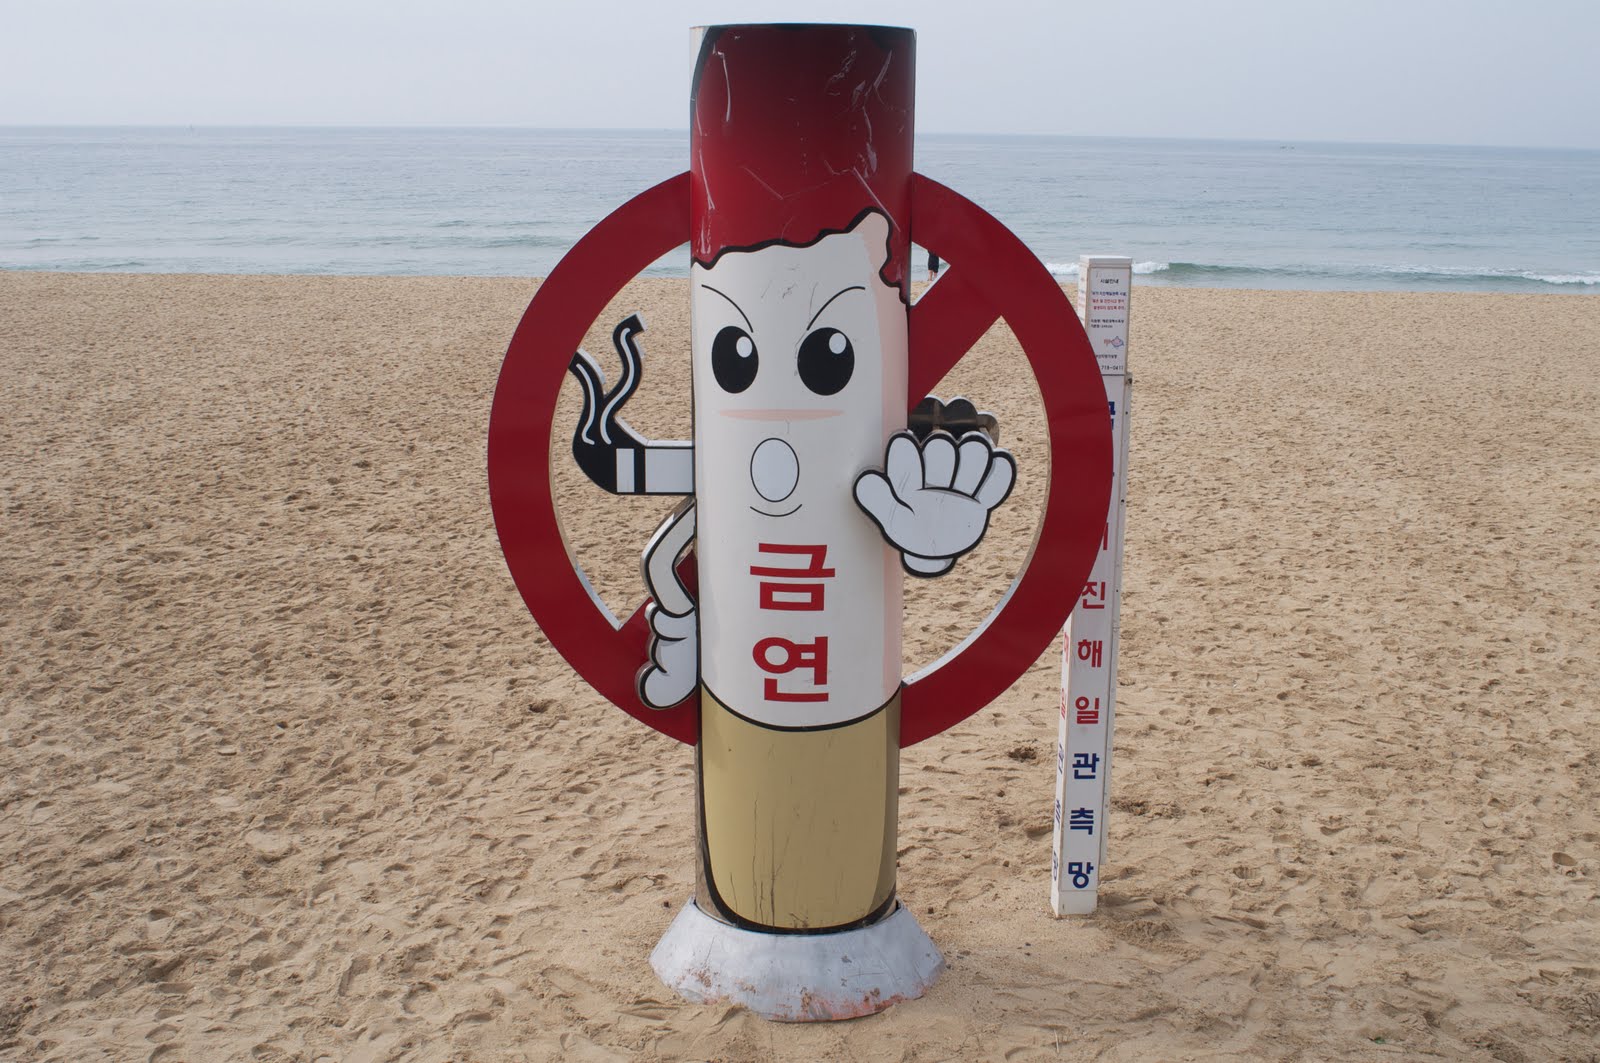  ... desu: Australia vs. Korea vs. Japan: No-Smoking Signs at Beaches